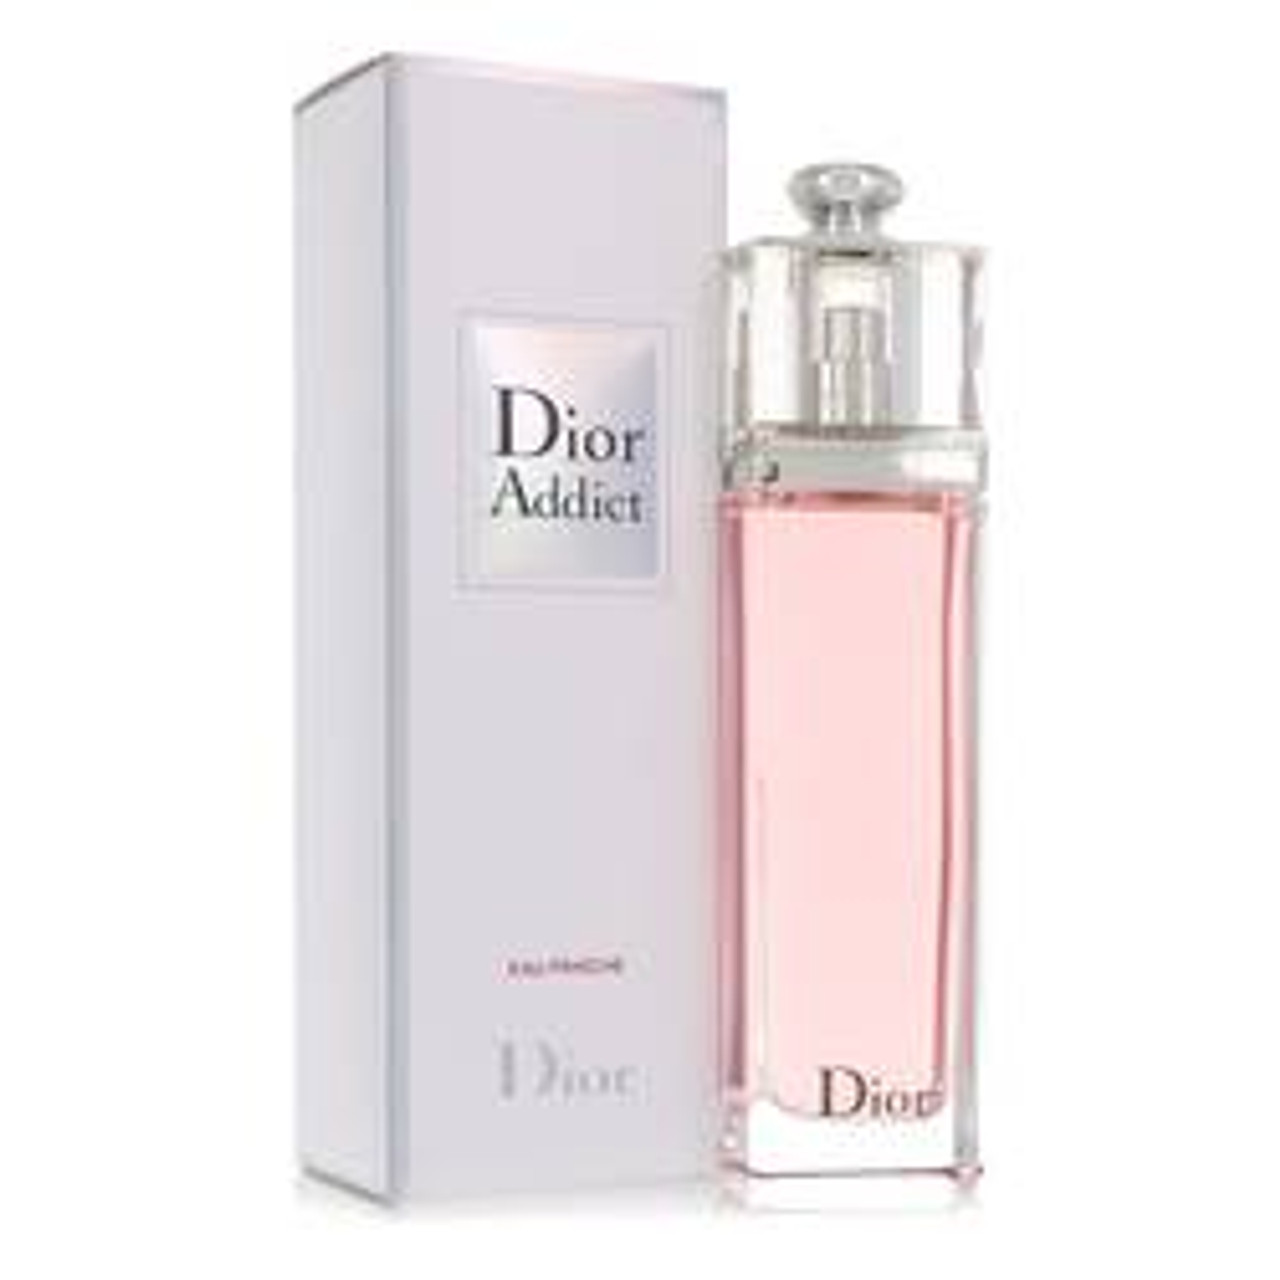 Dior Addict Perfume By Christian Dior Eau Fraiche Spray 3.4 oz for Women - *Pre-Order